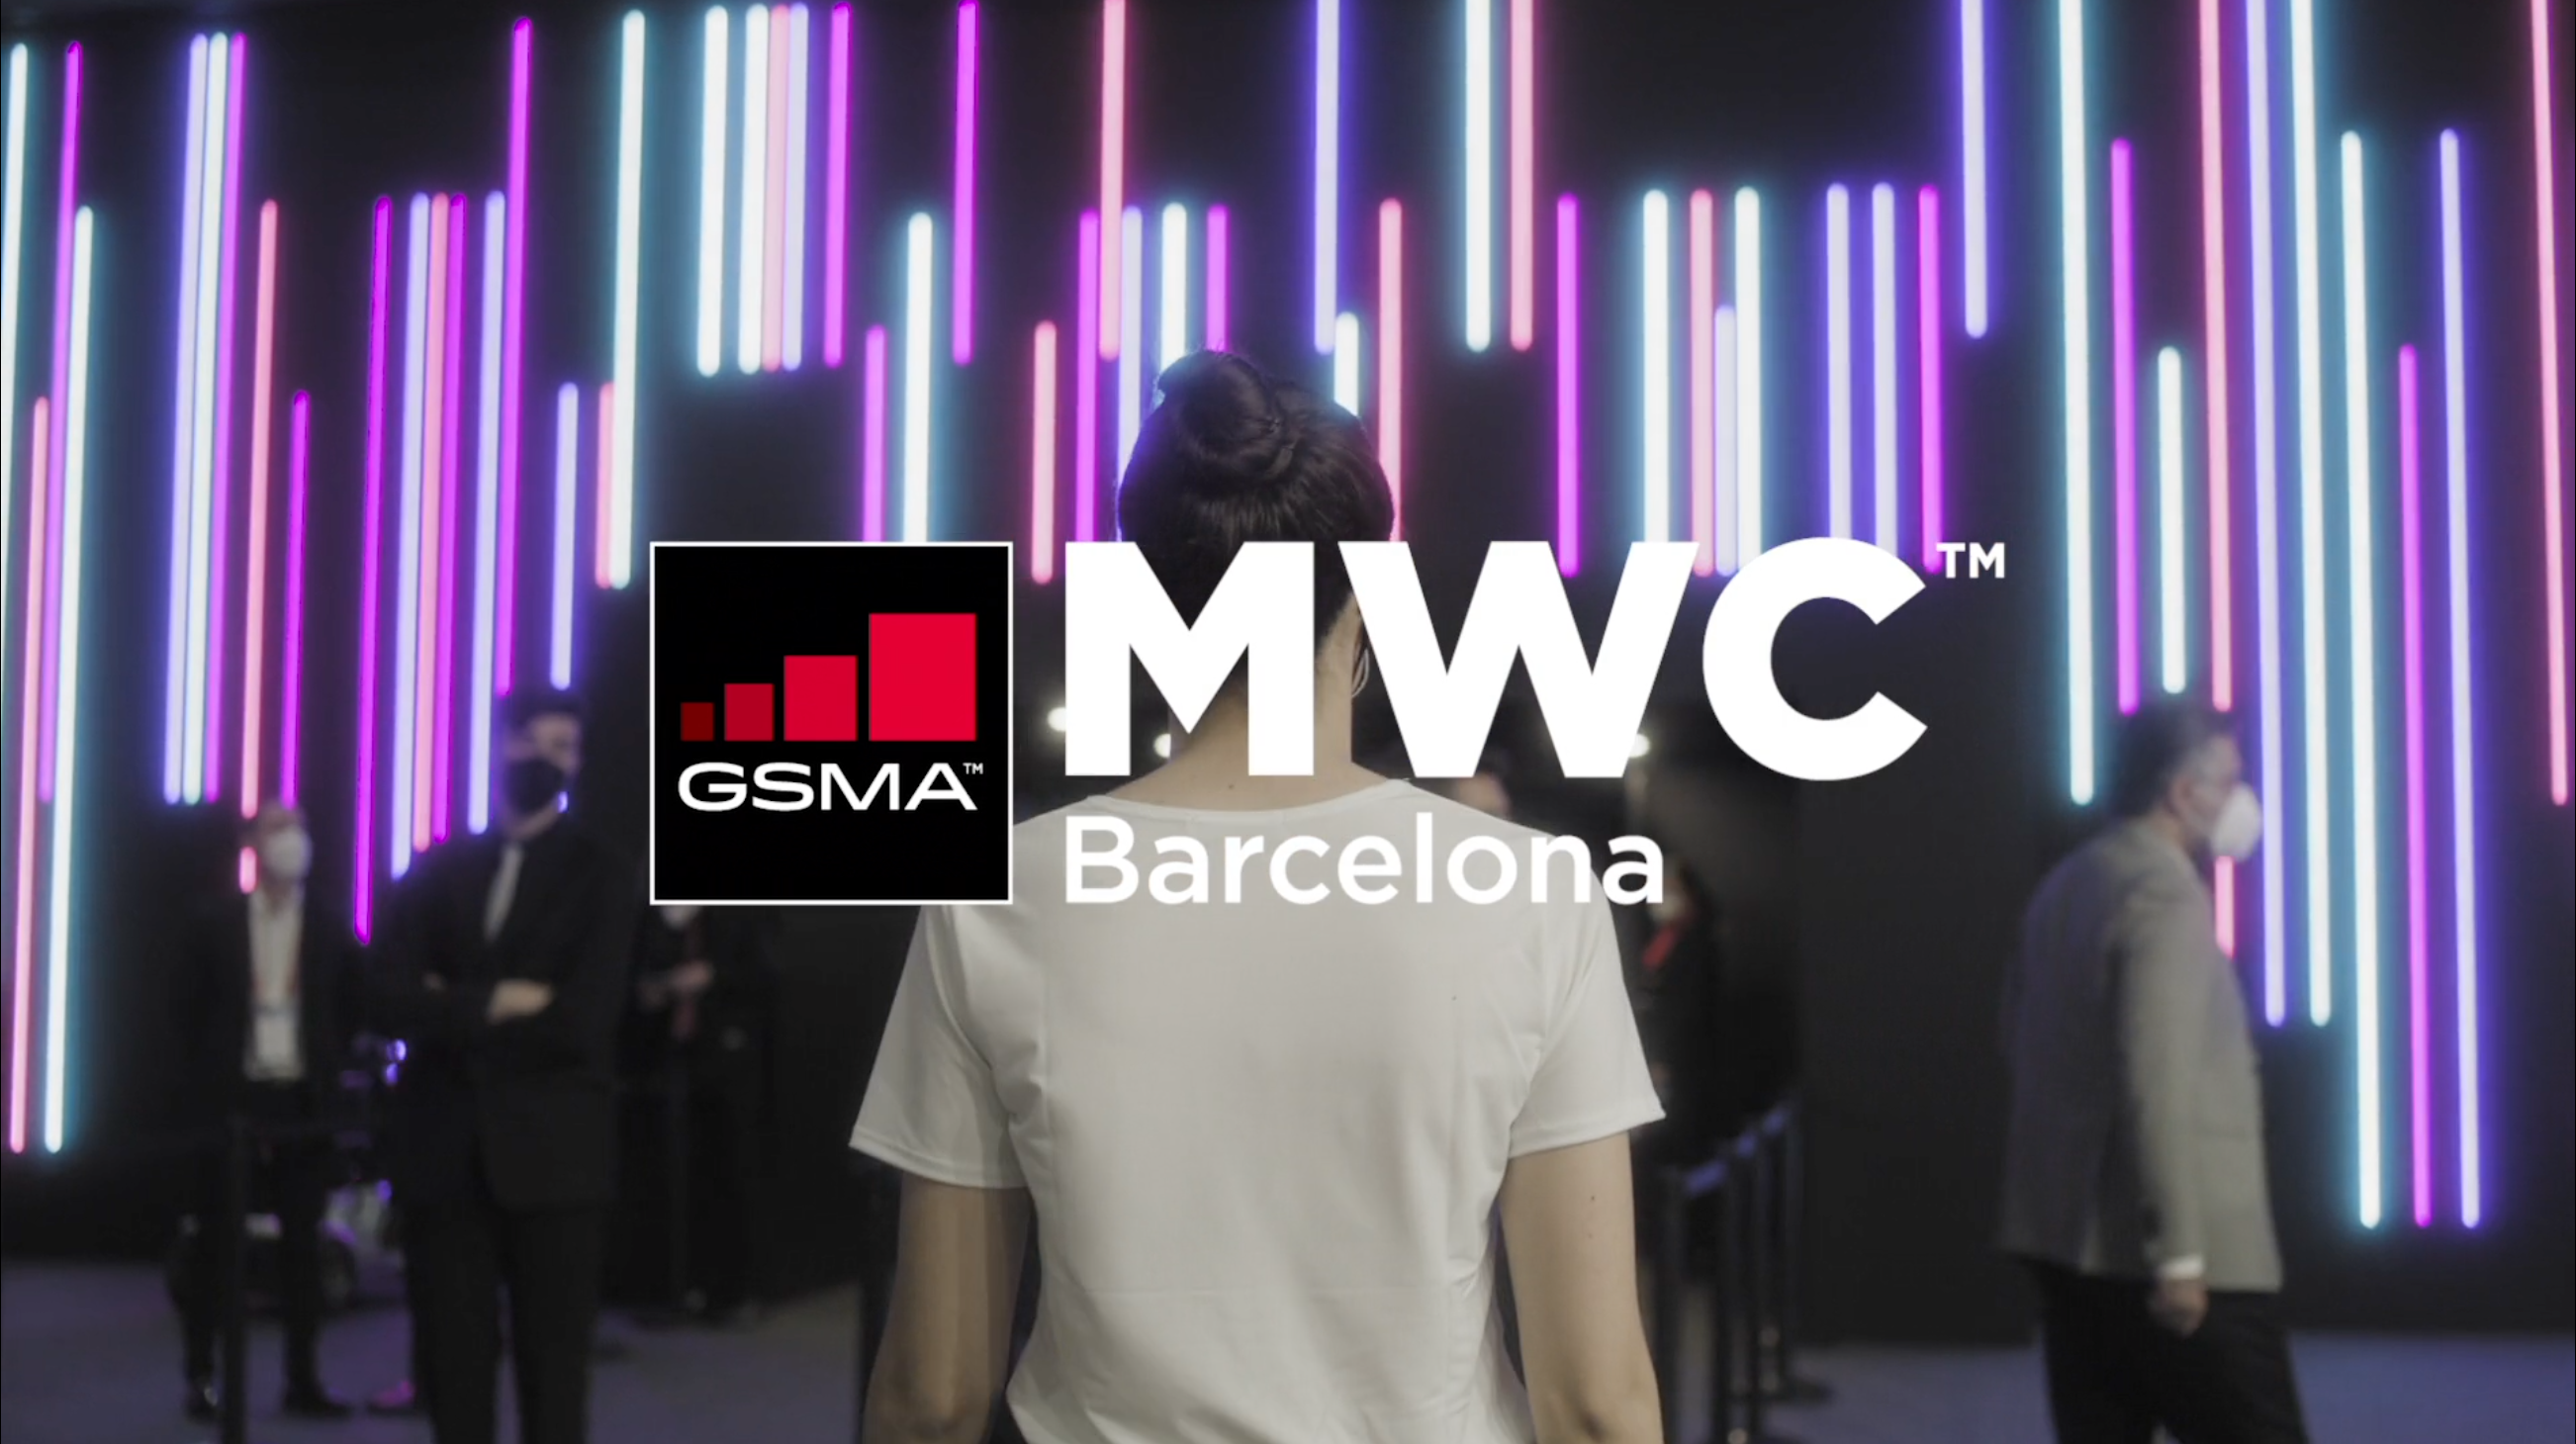 GSMA MWC Barcelona 2022